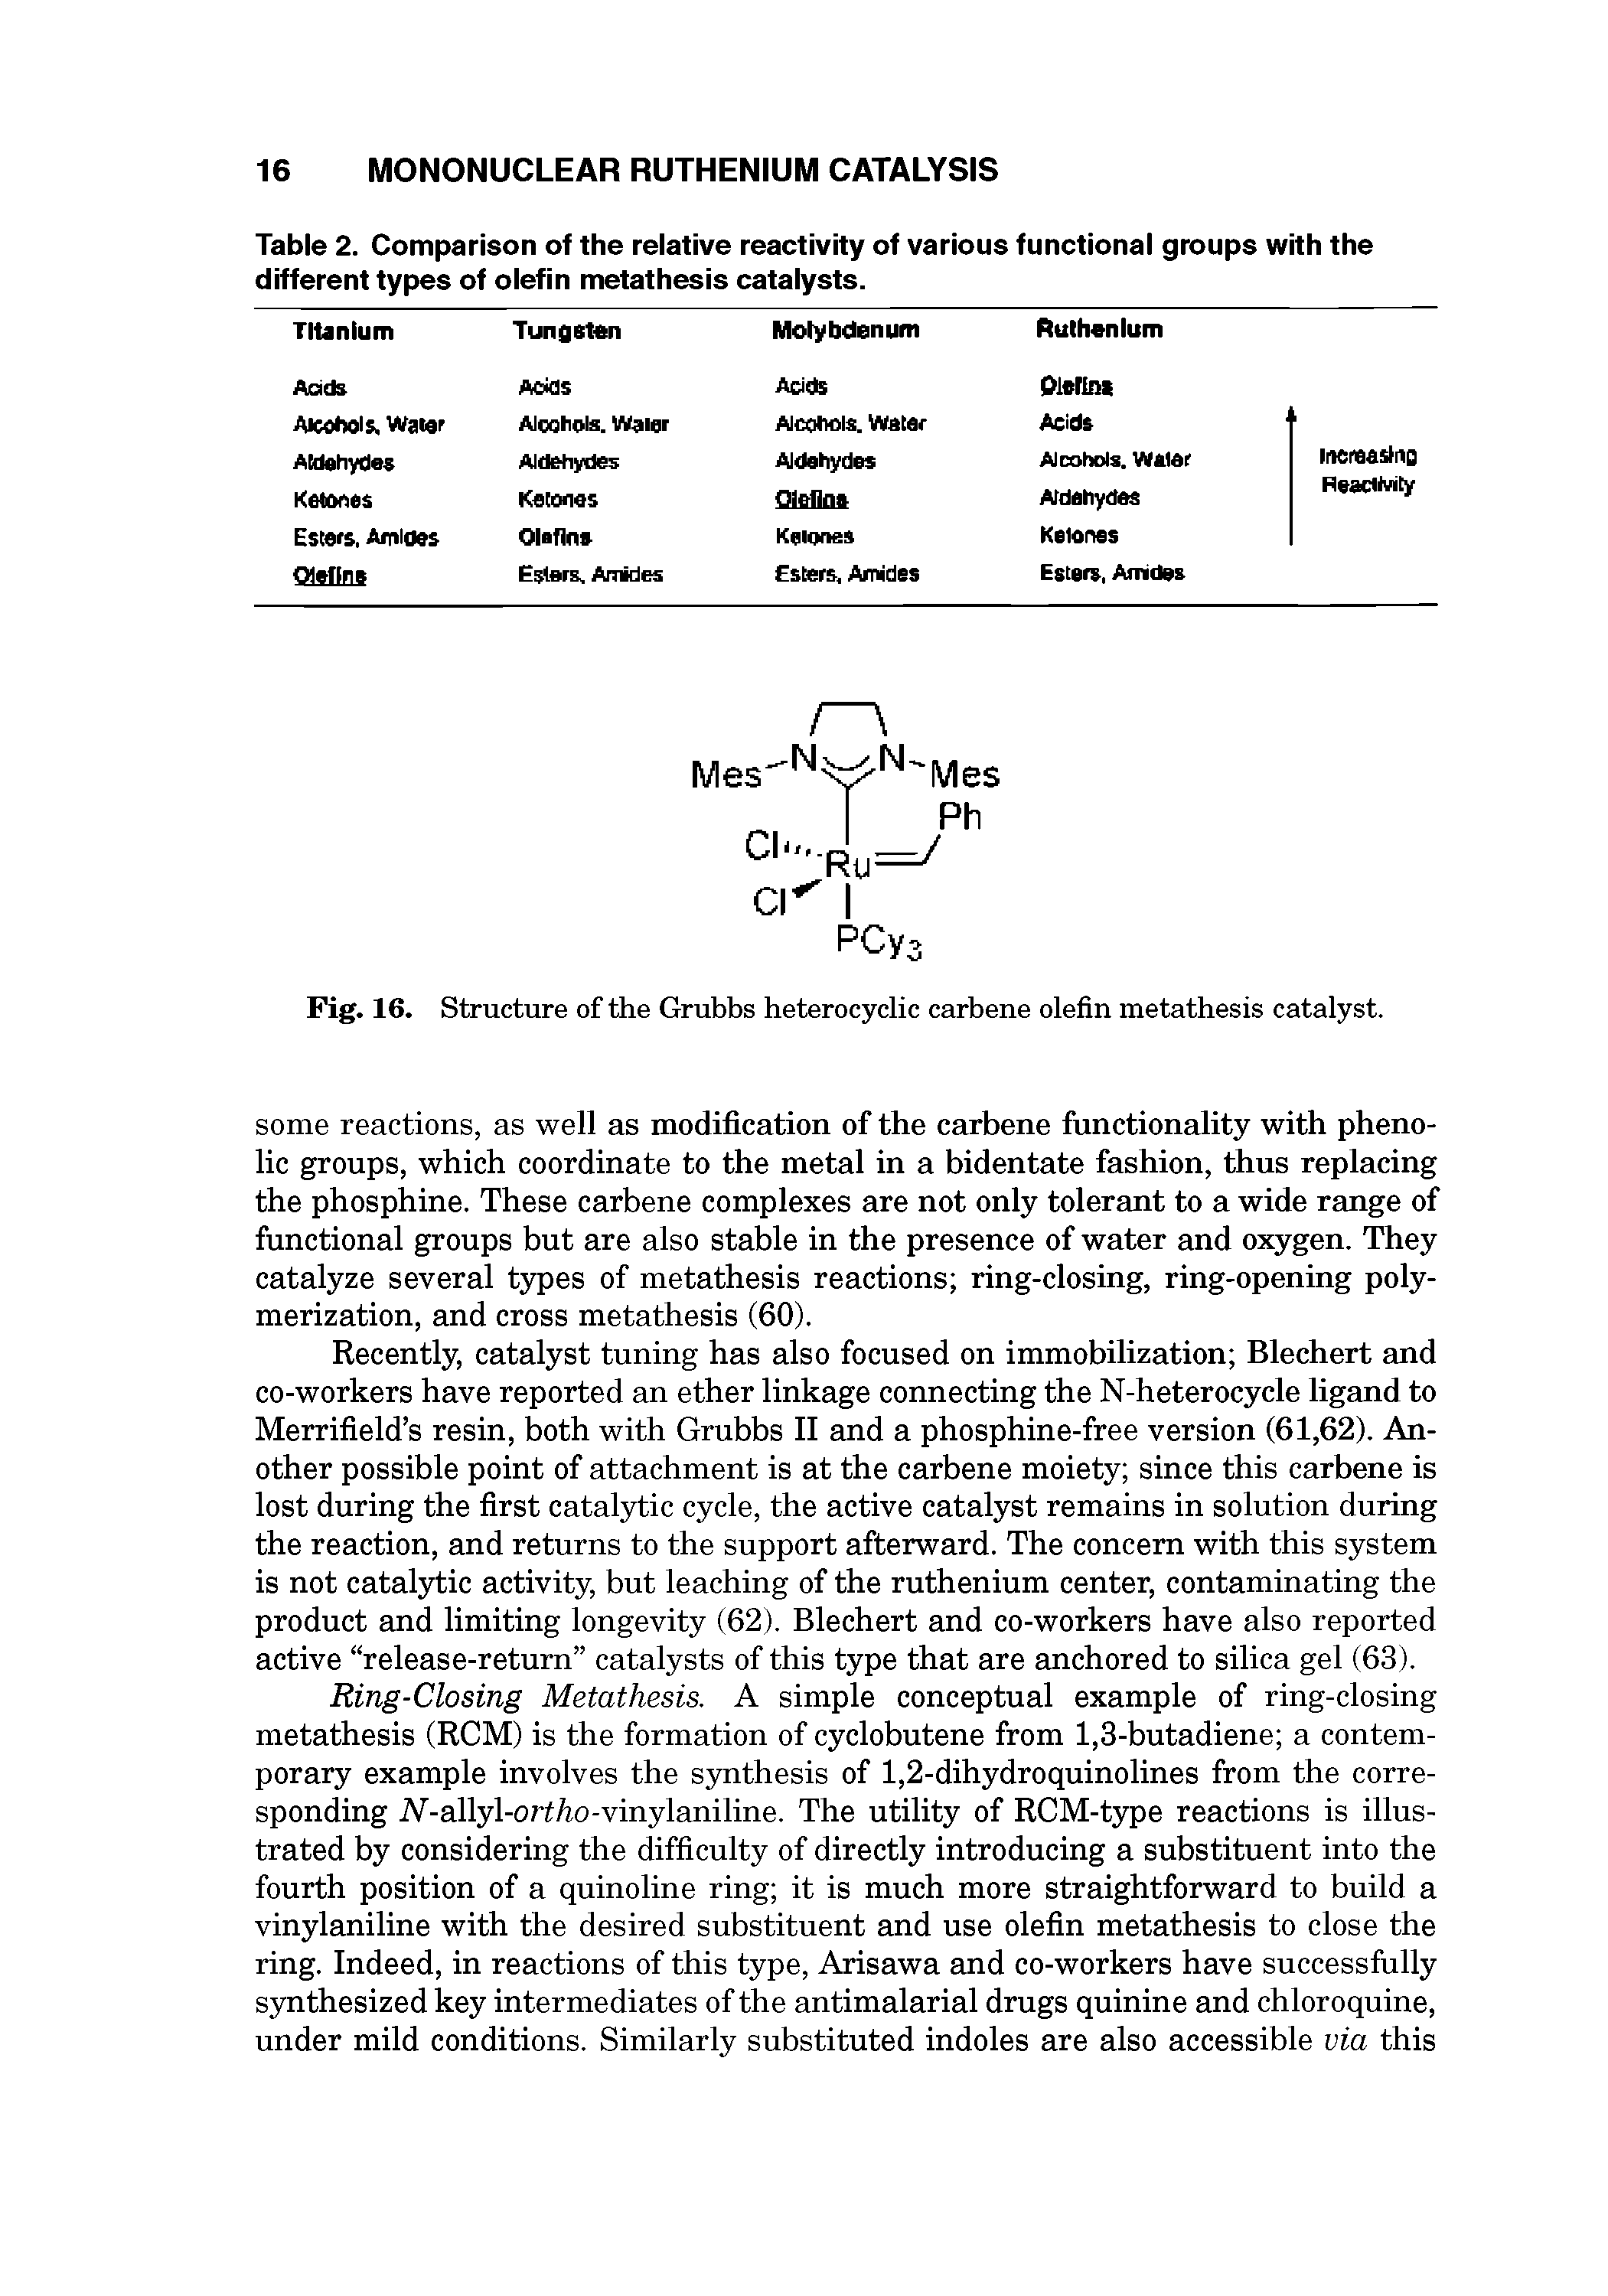 Fig. 16. Structure of the Grubbs heterocyclic carbene olefin metathesis catalyst.